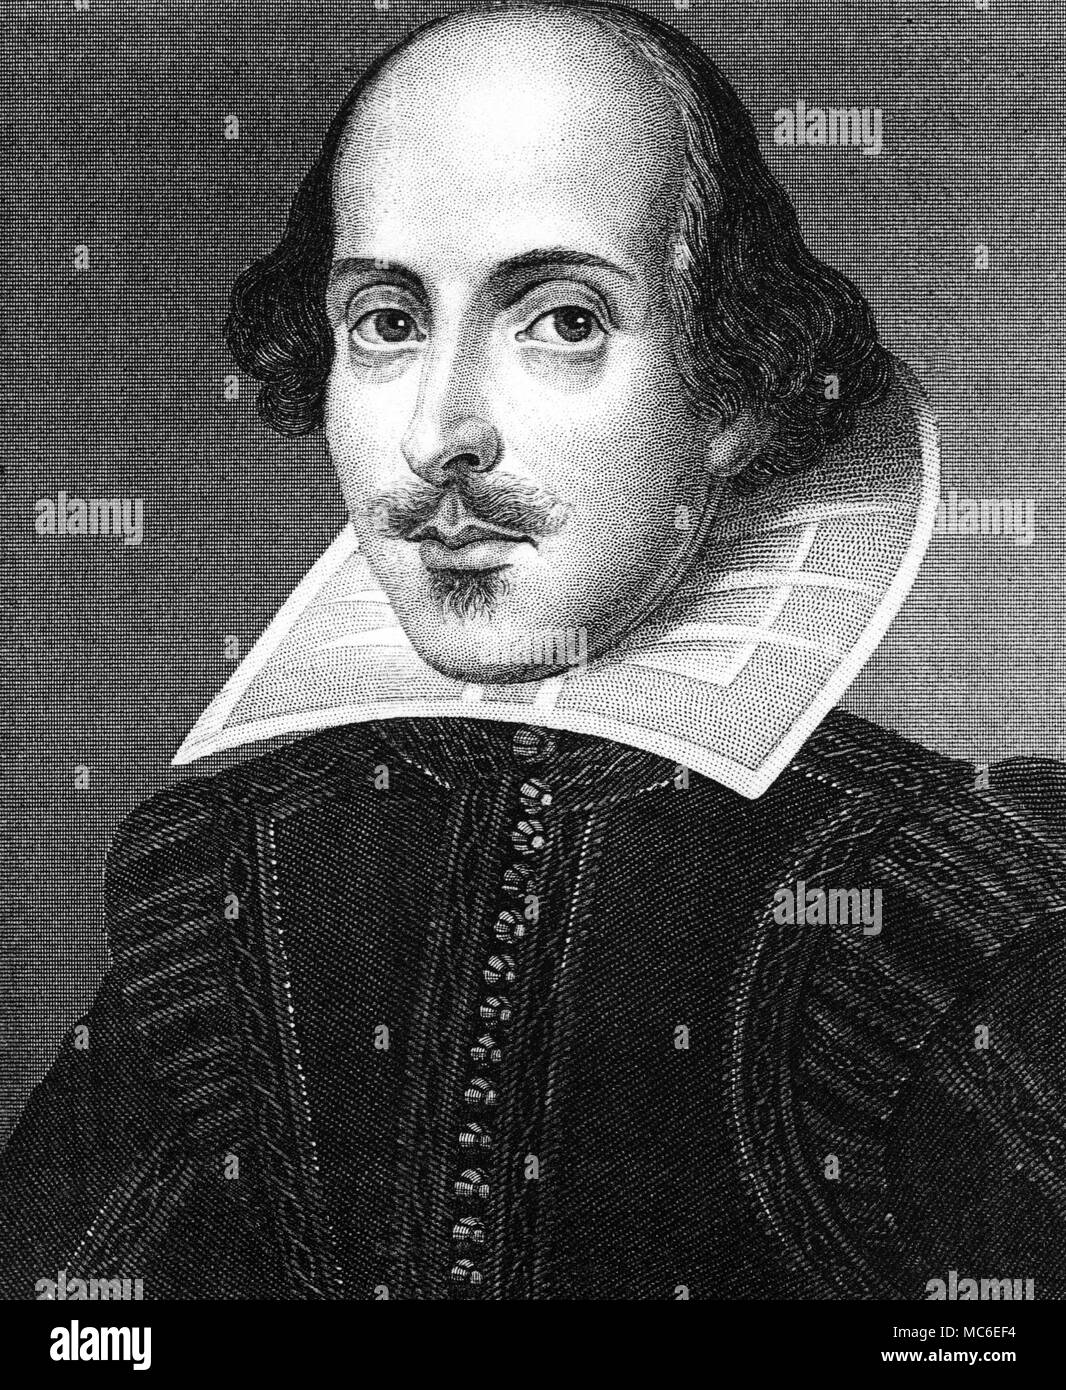 Impresión de Shakespeare de Martin Droeshout retrato del bardo. Foto de stock